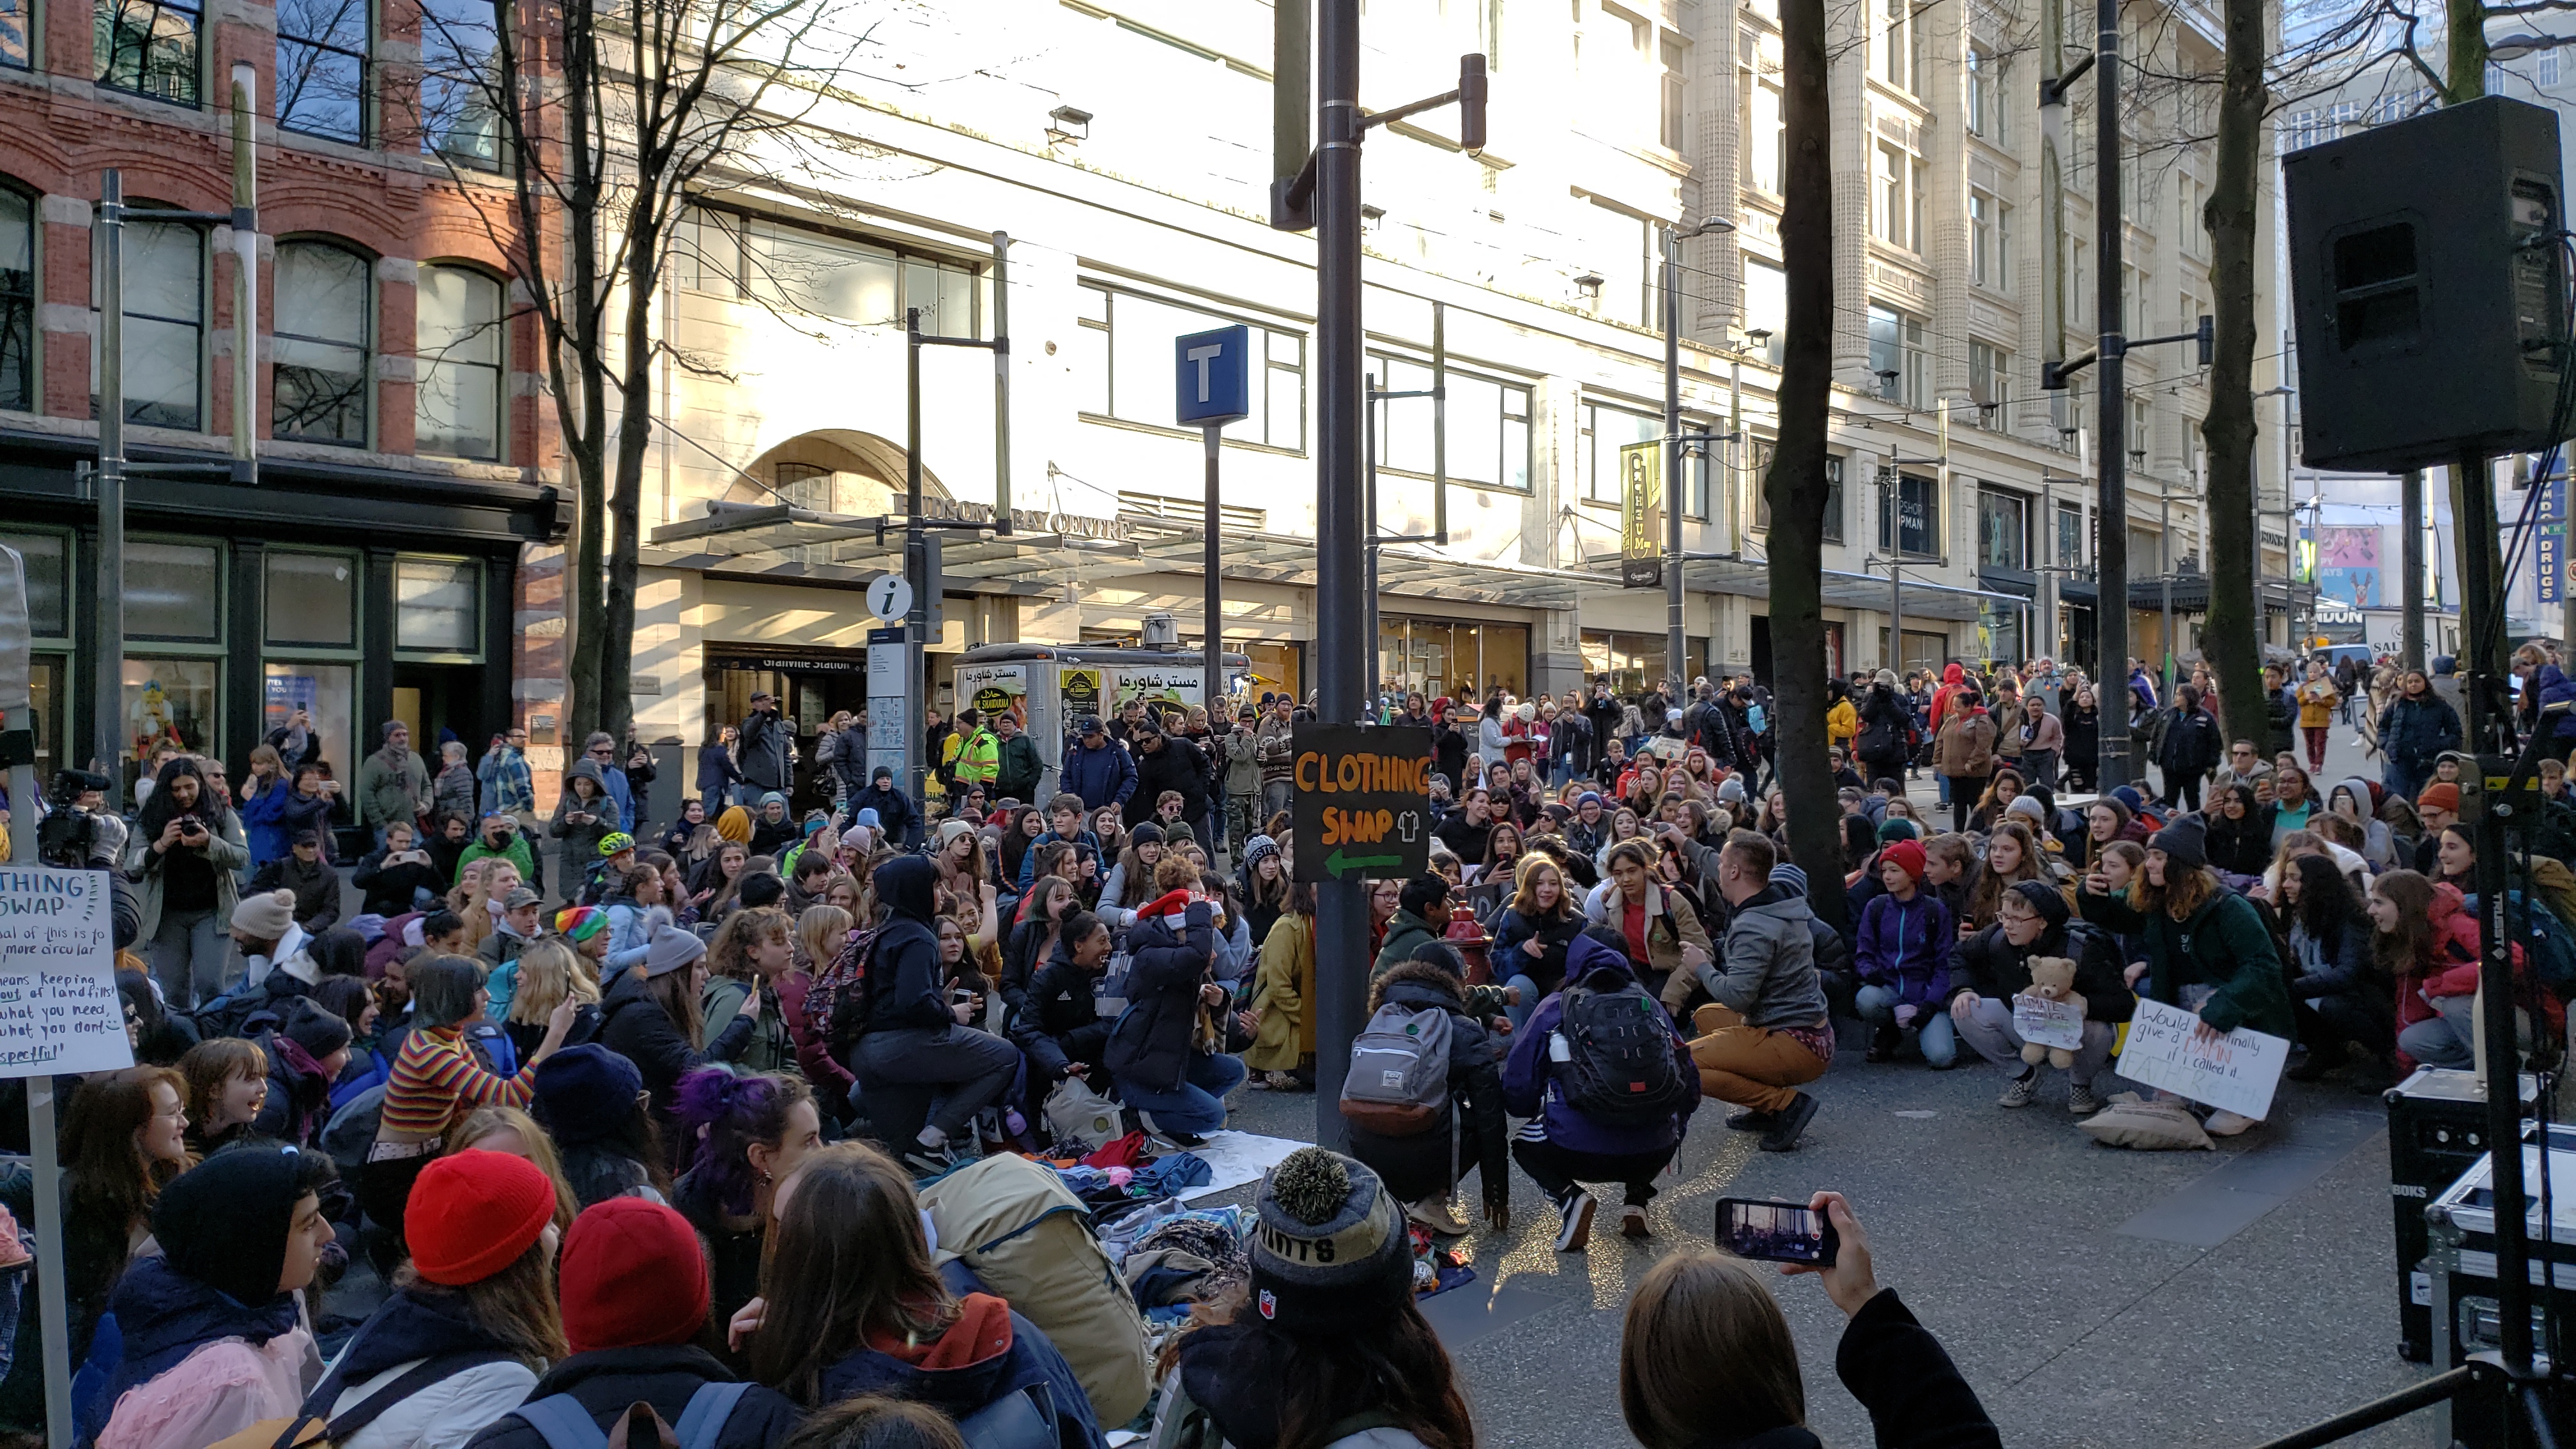 https://www.citynews1130.com/wp-content/blogs.dir/sites/9/2019/11/29/Nov-29-clothing-swap-and-protest.jpg